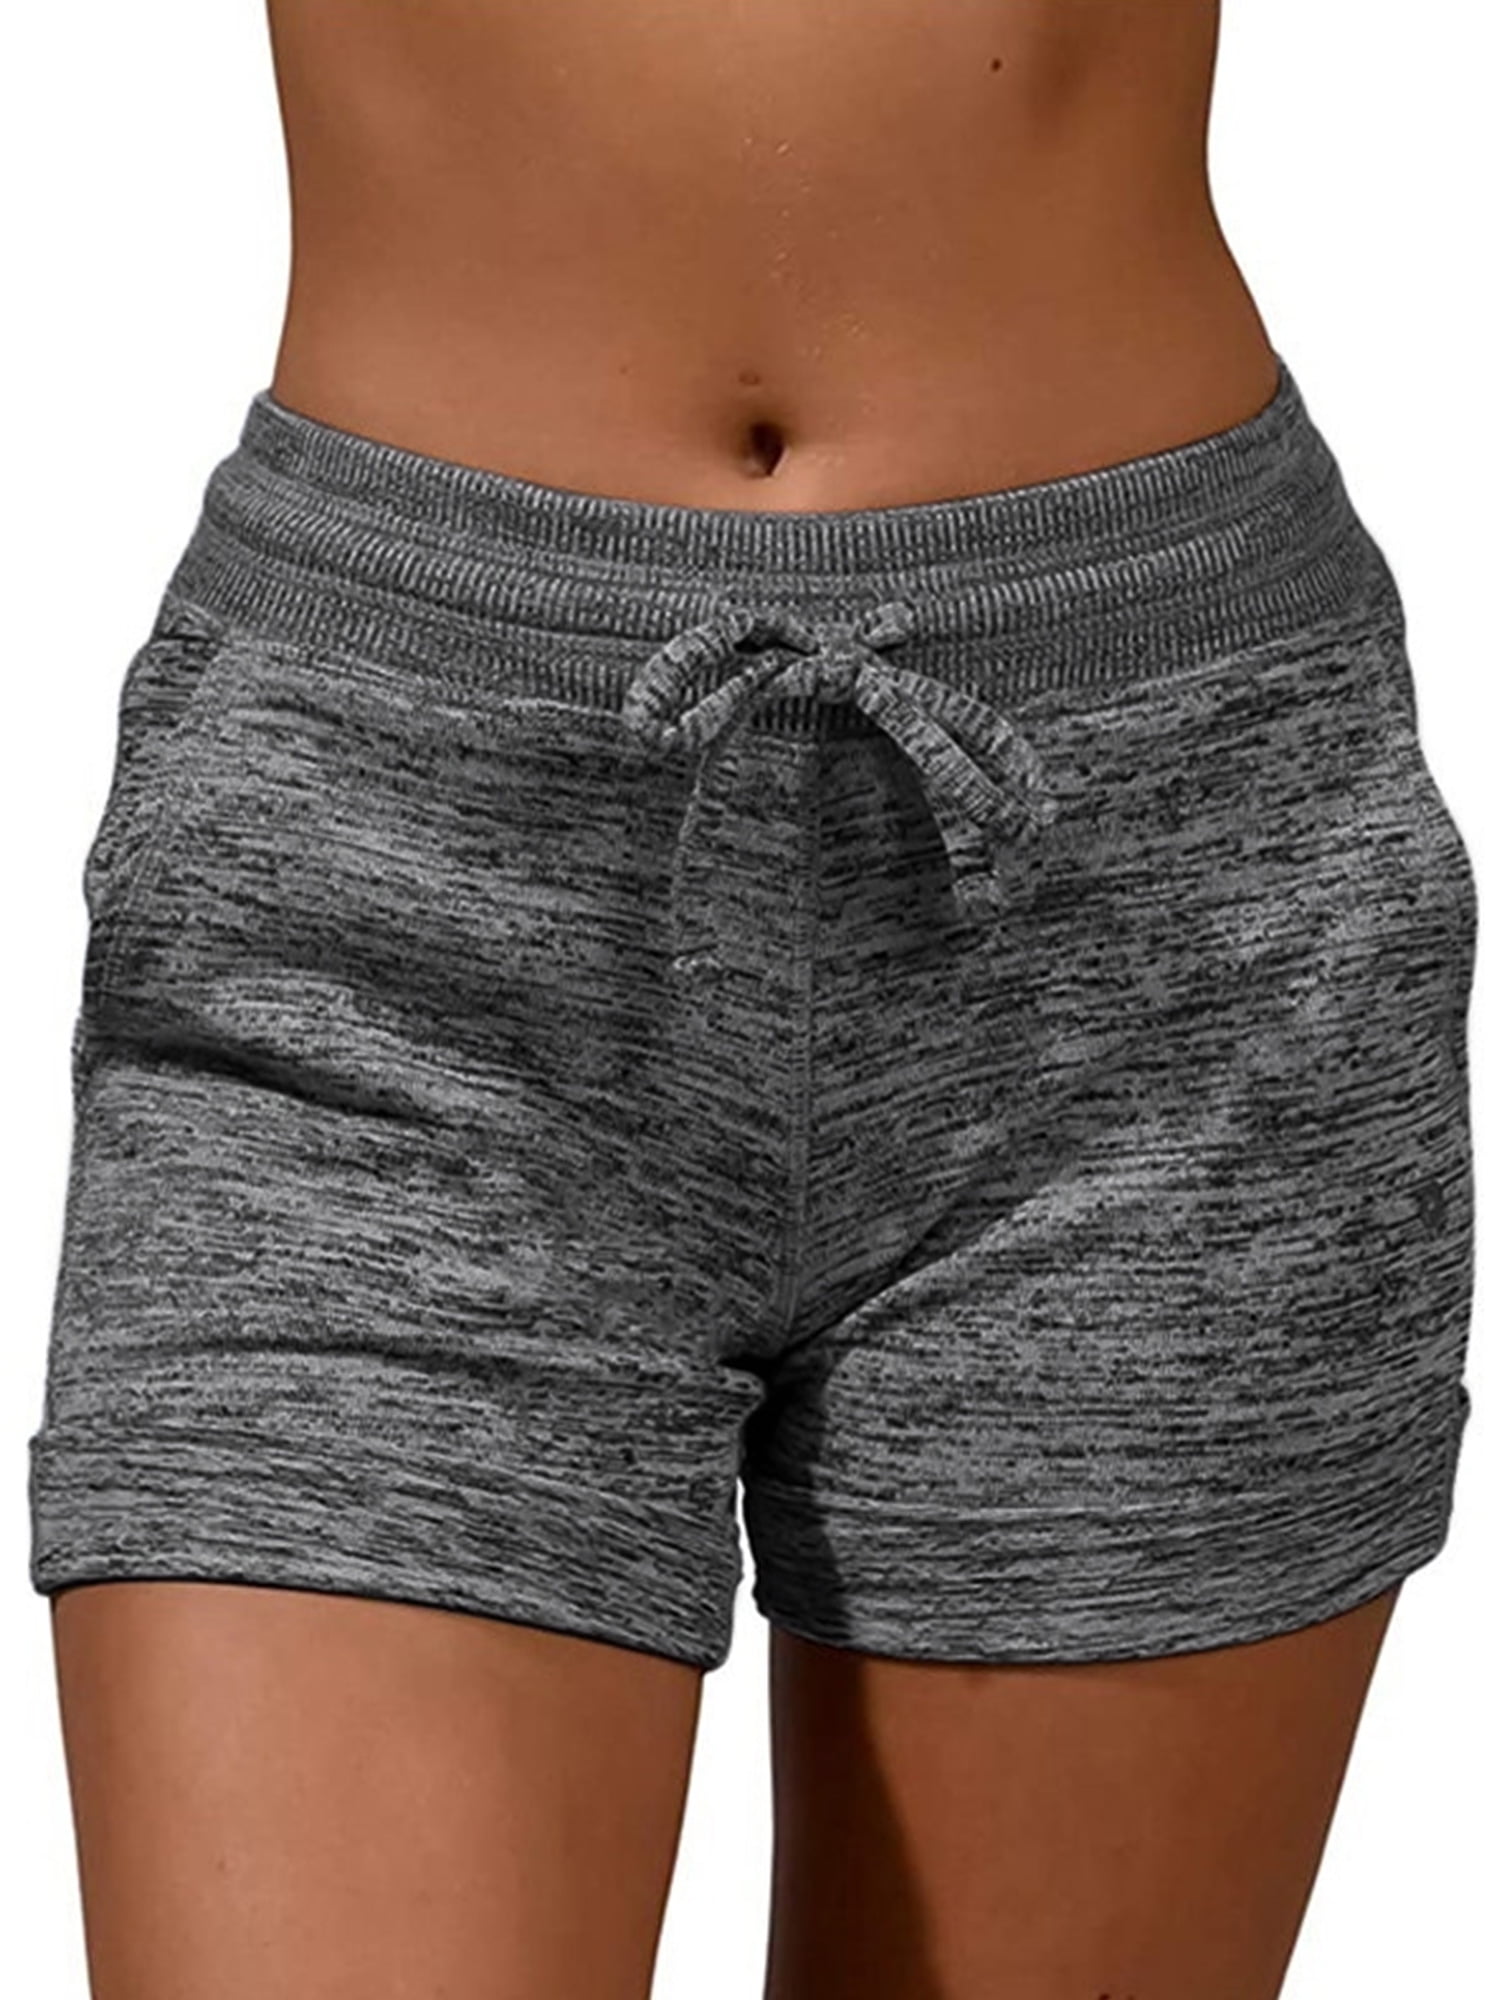 Fashion Women Summer Lace Plus Size Rope Tie Shorts Yoga Sport Pants Casual Beach Shorts by kaiCran 